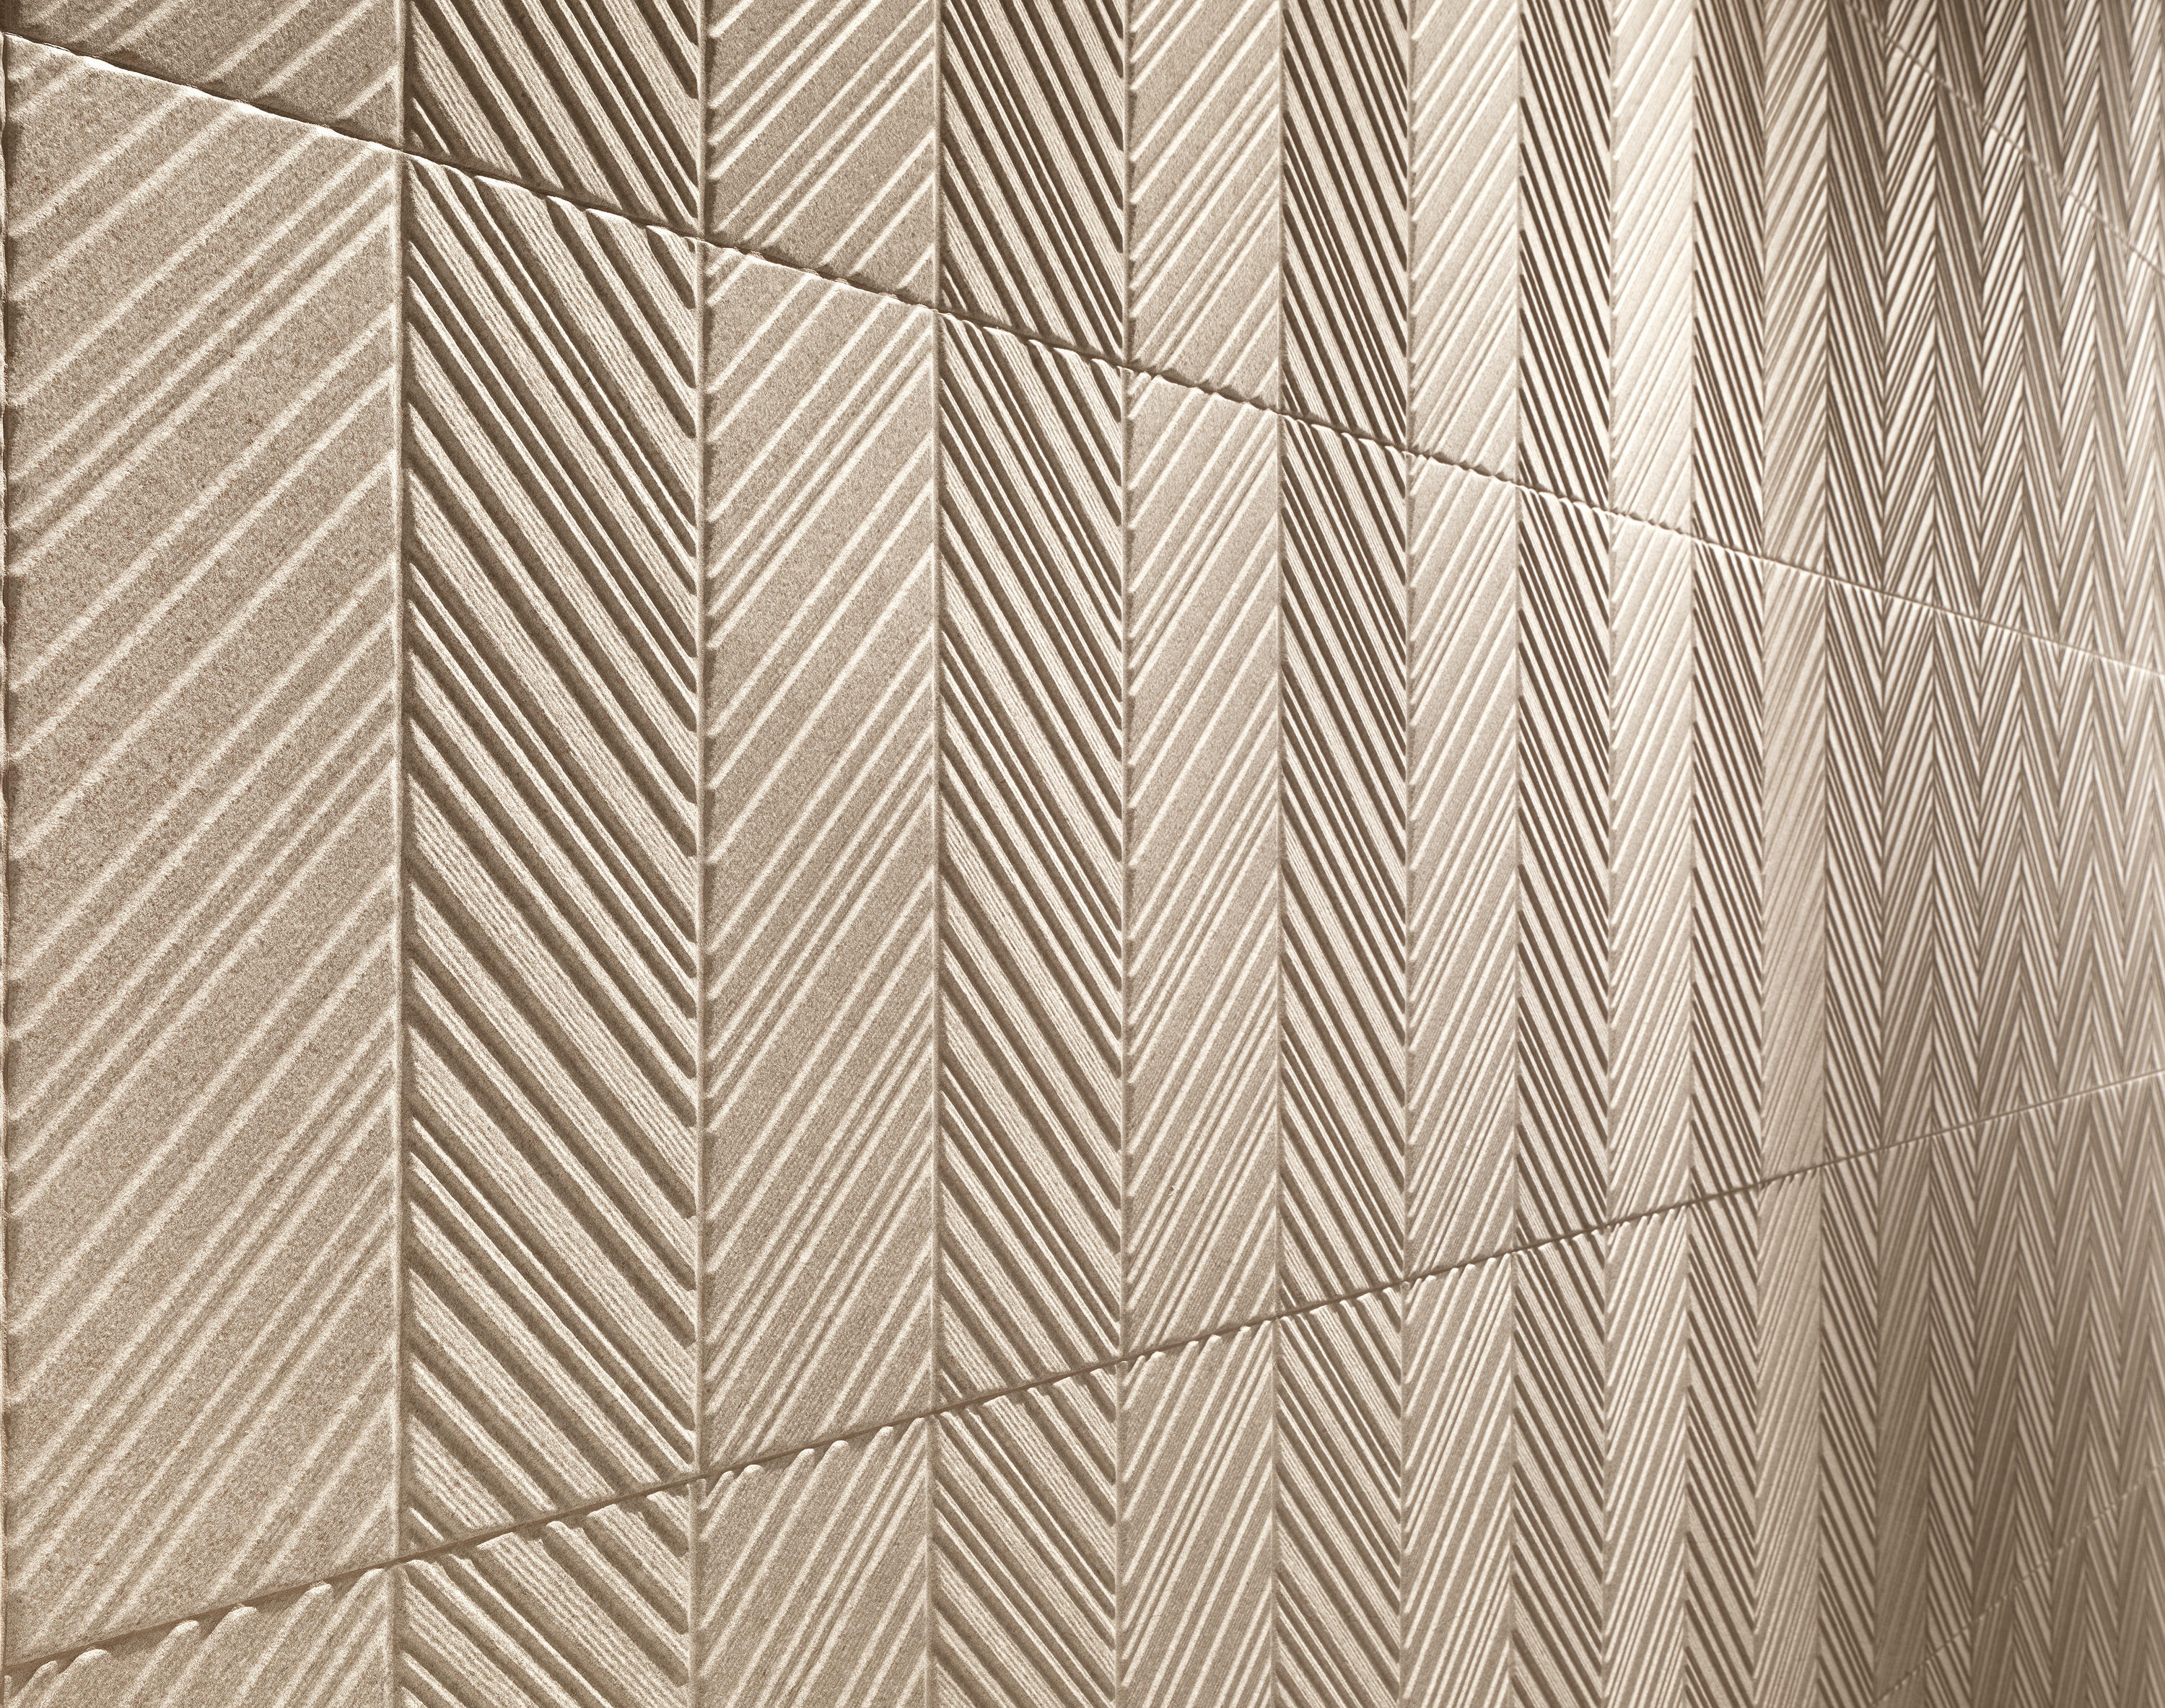 NUX BEIGE - Ceramic tiles from Fap Ceramiche | Architonic